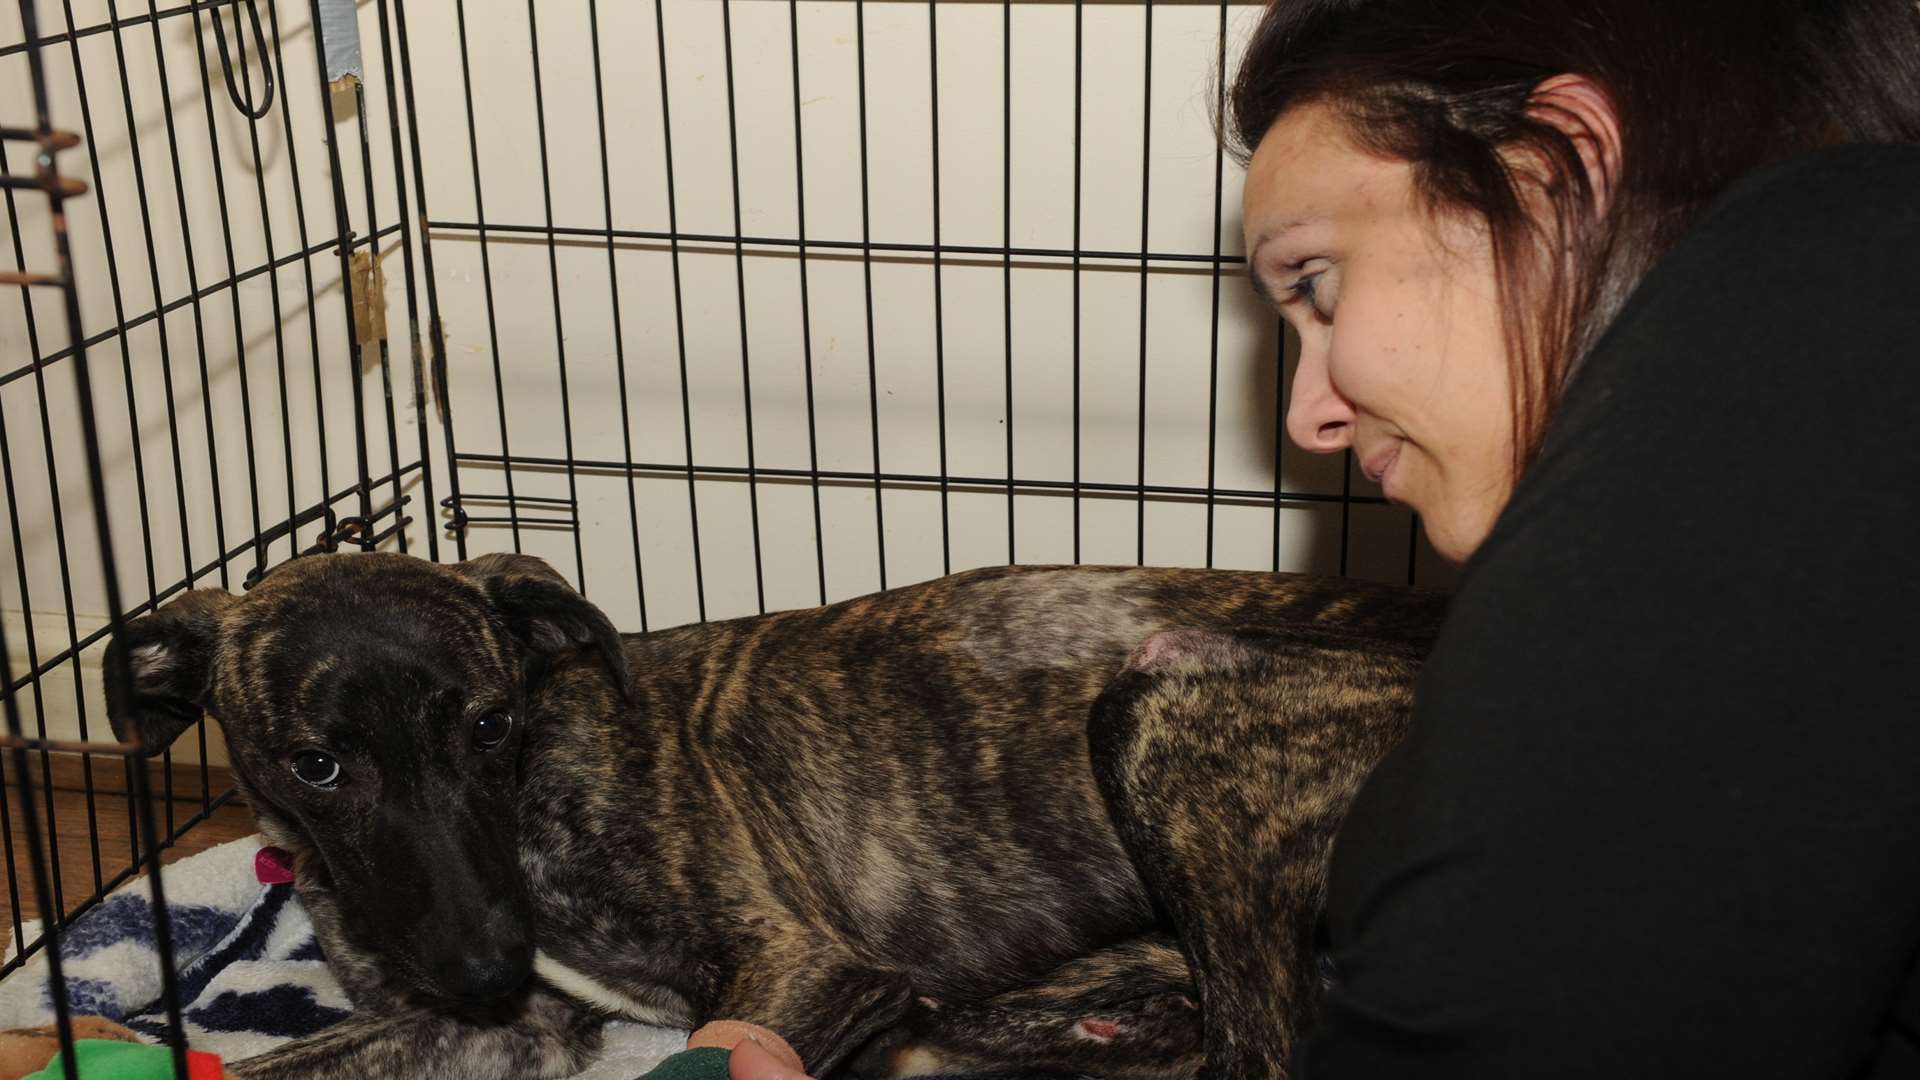 Kate Walton has adopted injured dog called Belle